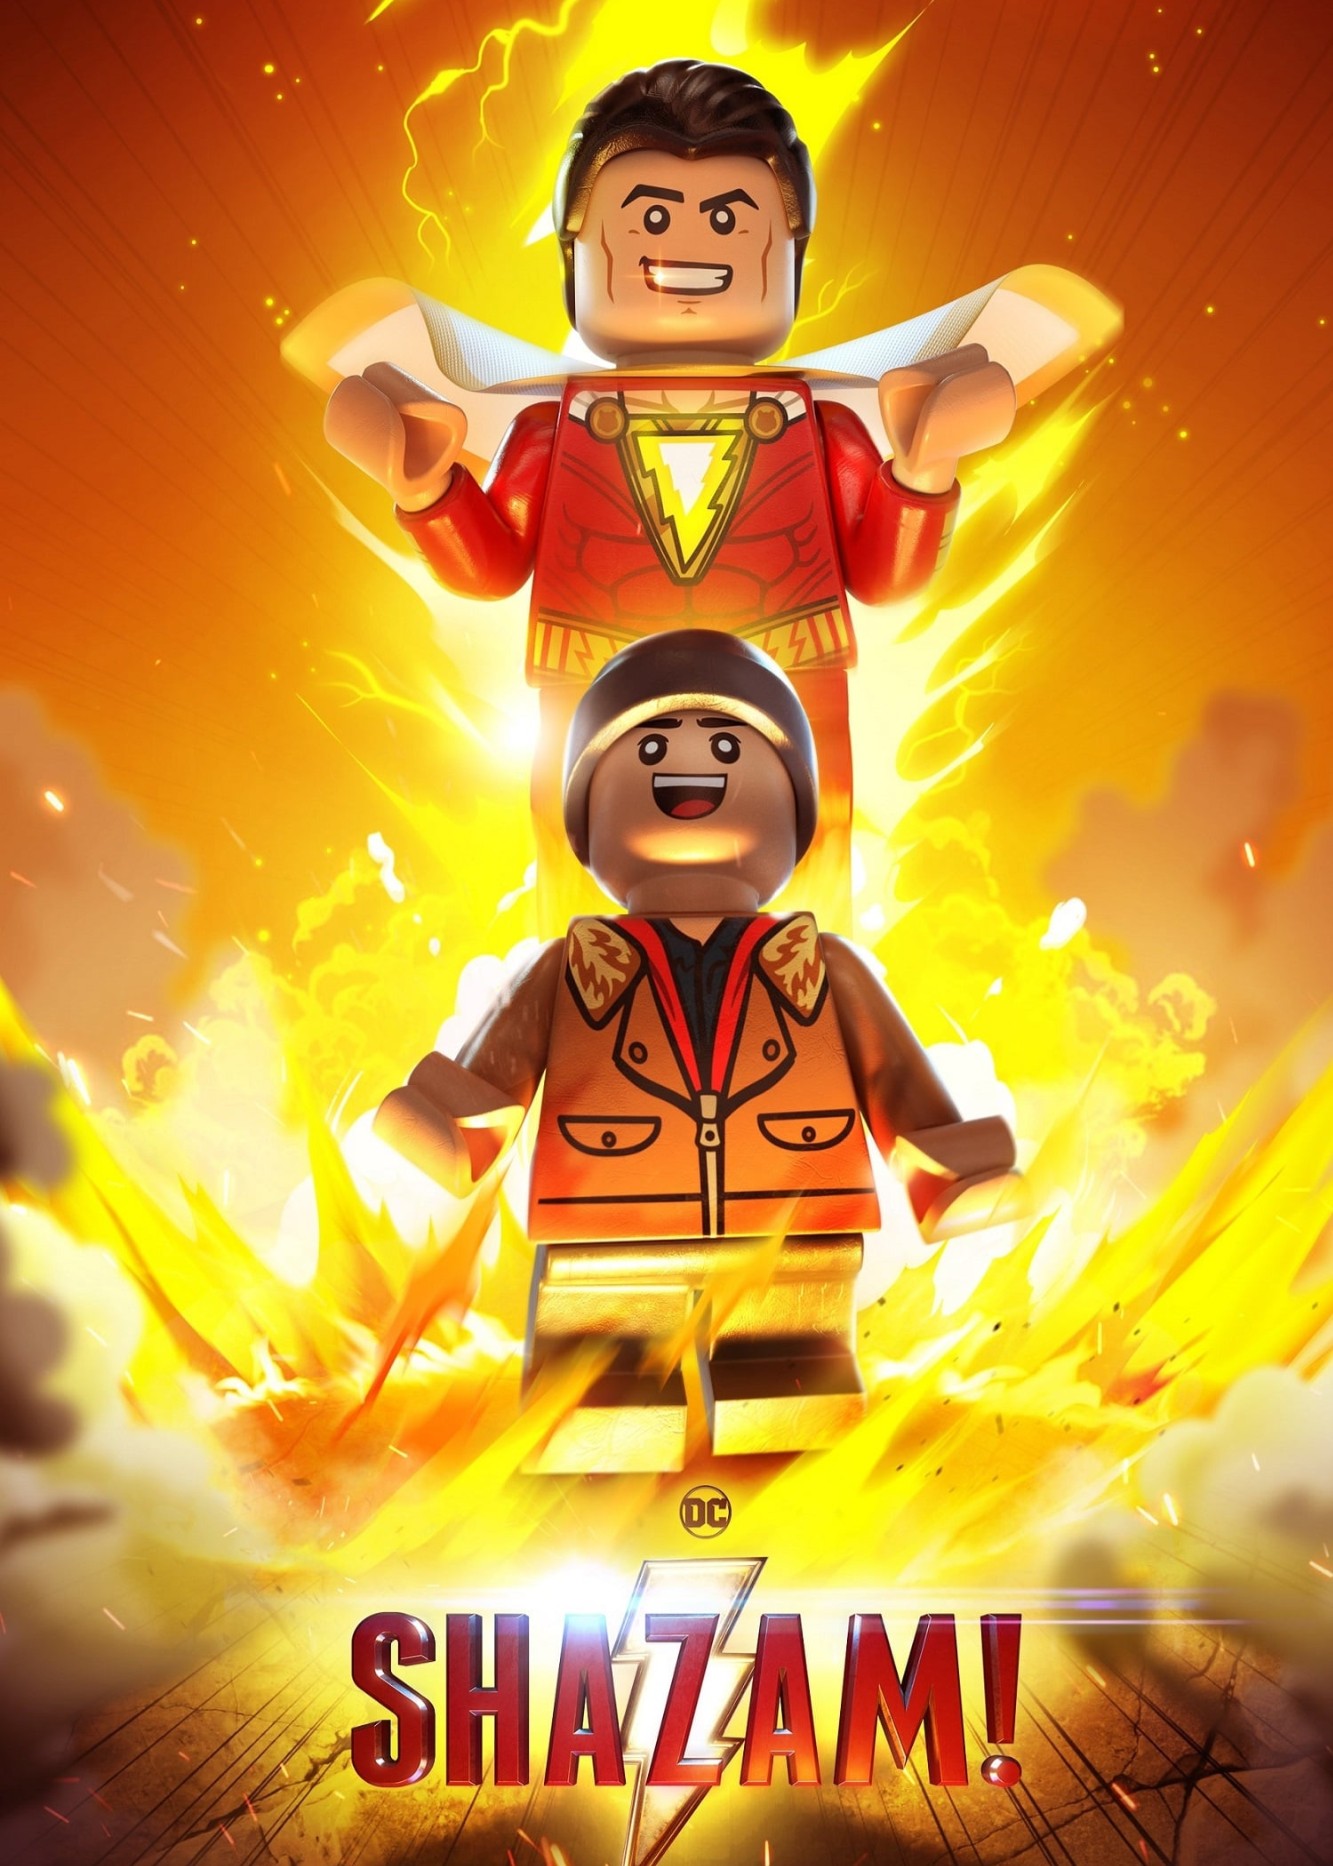 LEGO DC Shazam!: Magic and Monsters 2020